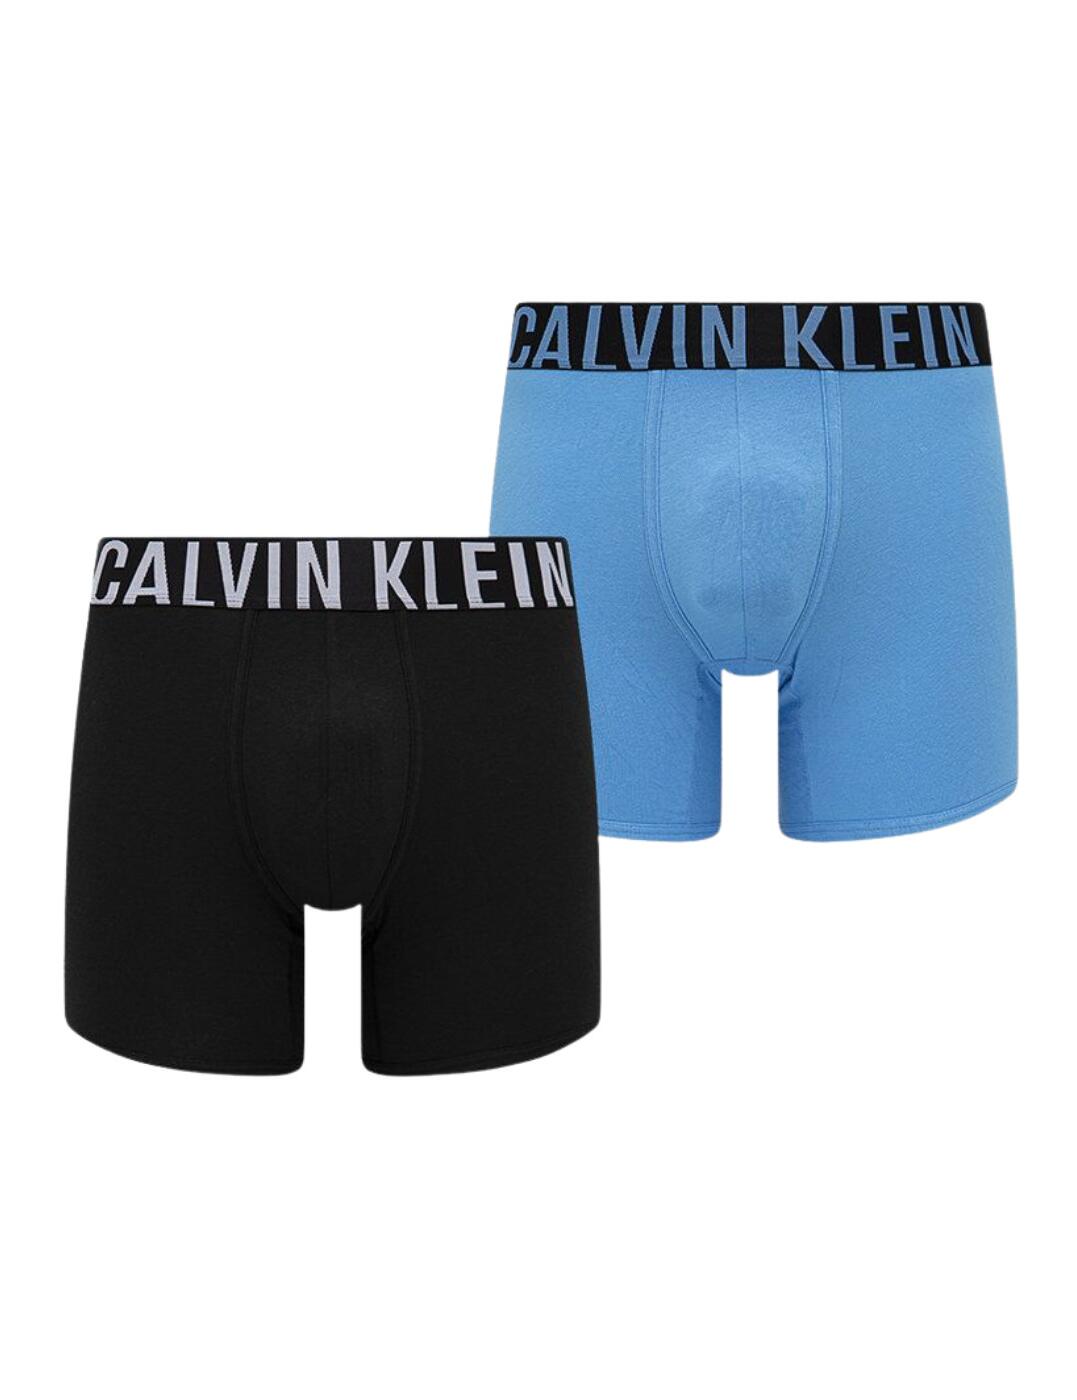 Calvin Klein Mens Intense Power Boxer Brief 2 Pack Black/Signature Blue	